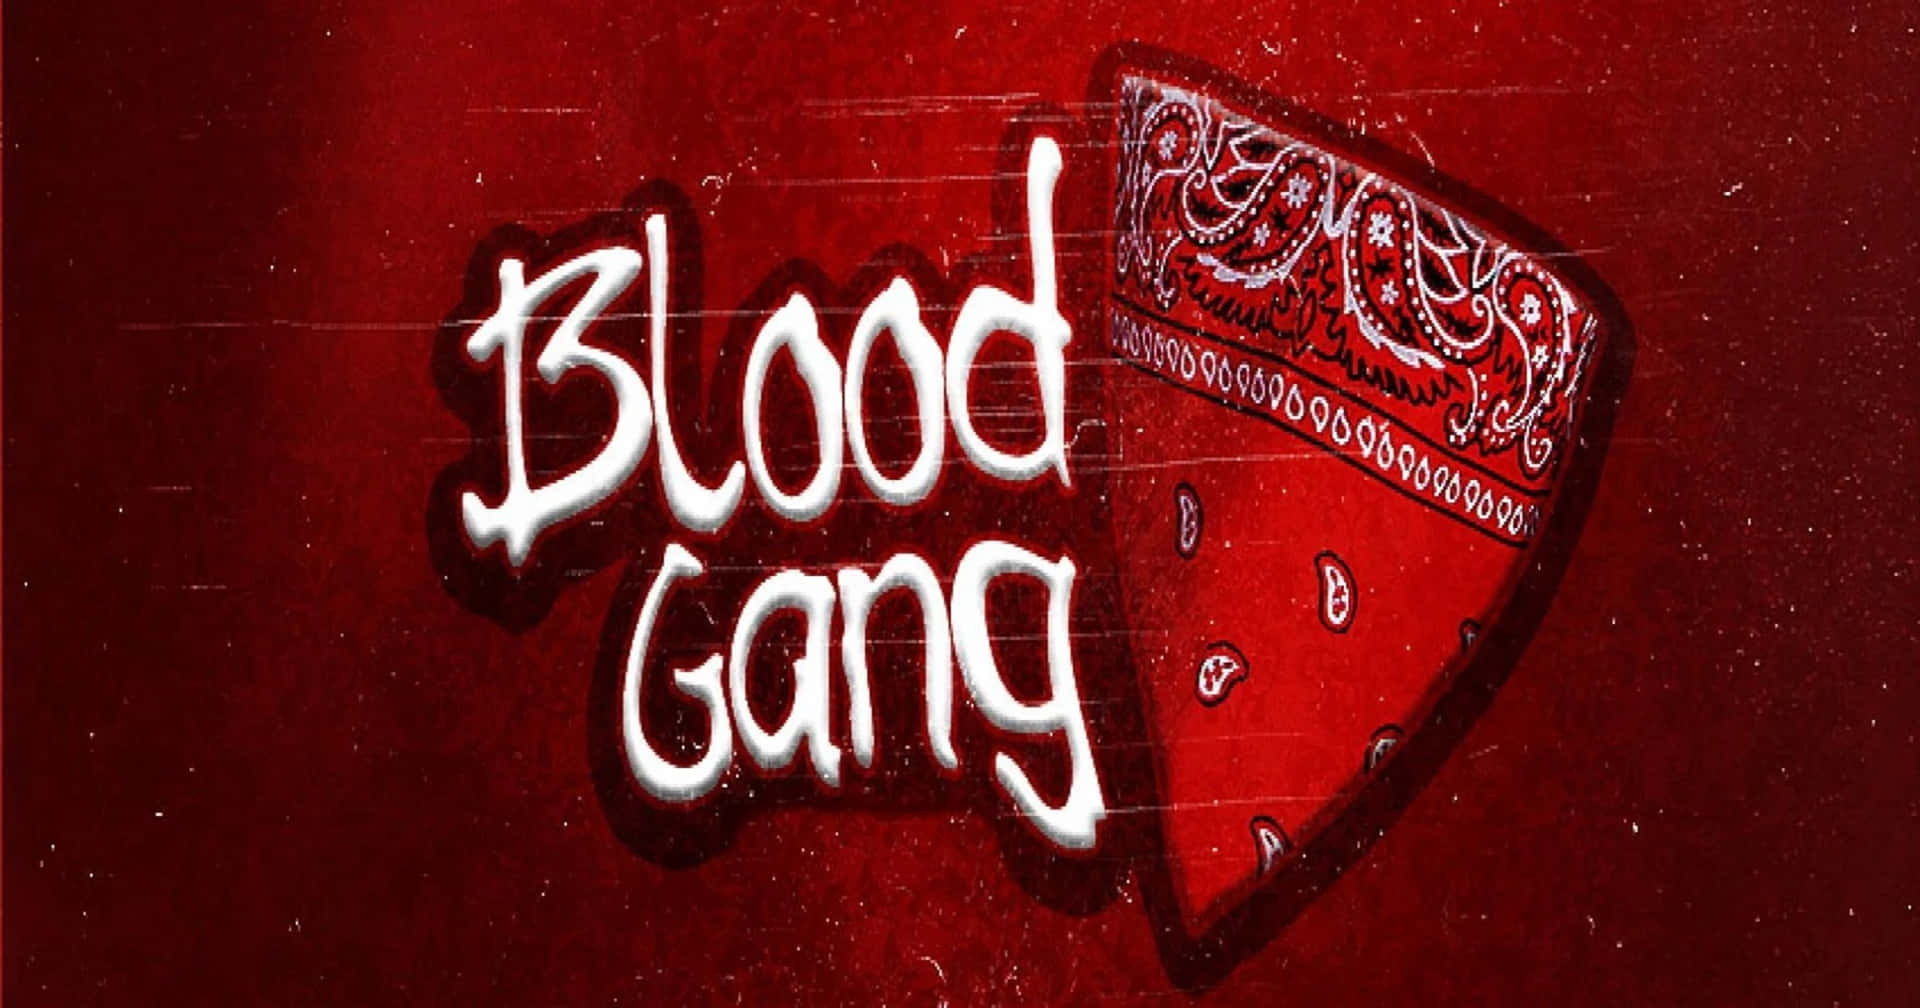 Free Blood Gang Wallpaper Downloads, [100+] Blood Gang Wallpapers for FREE  